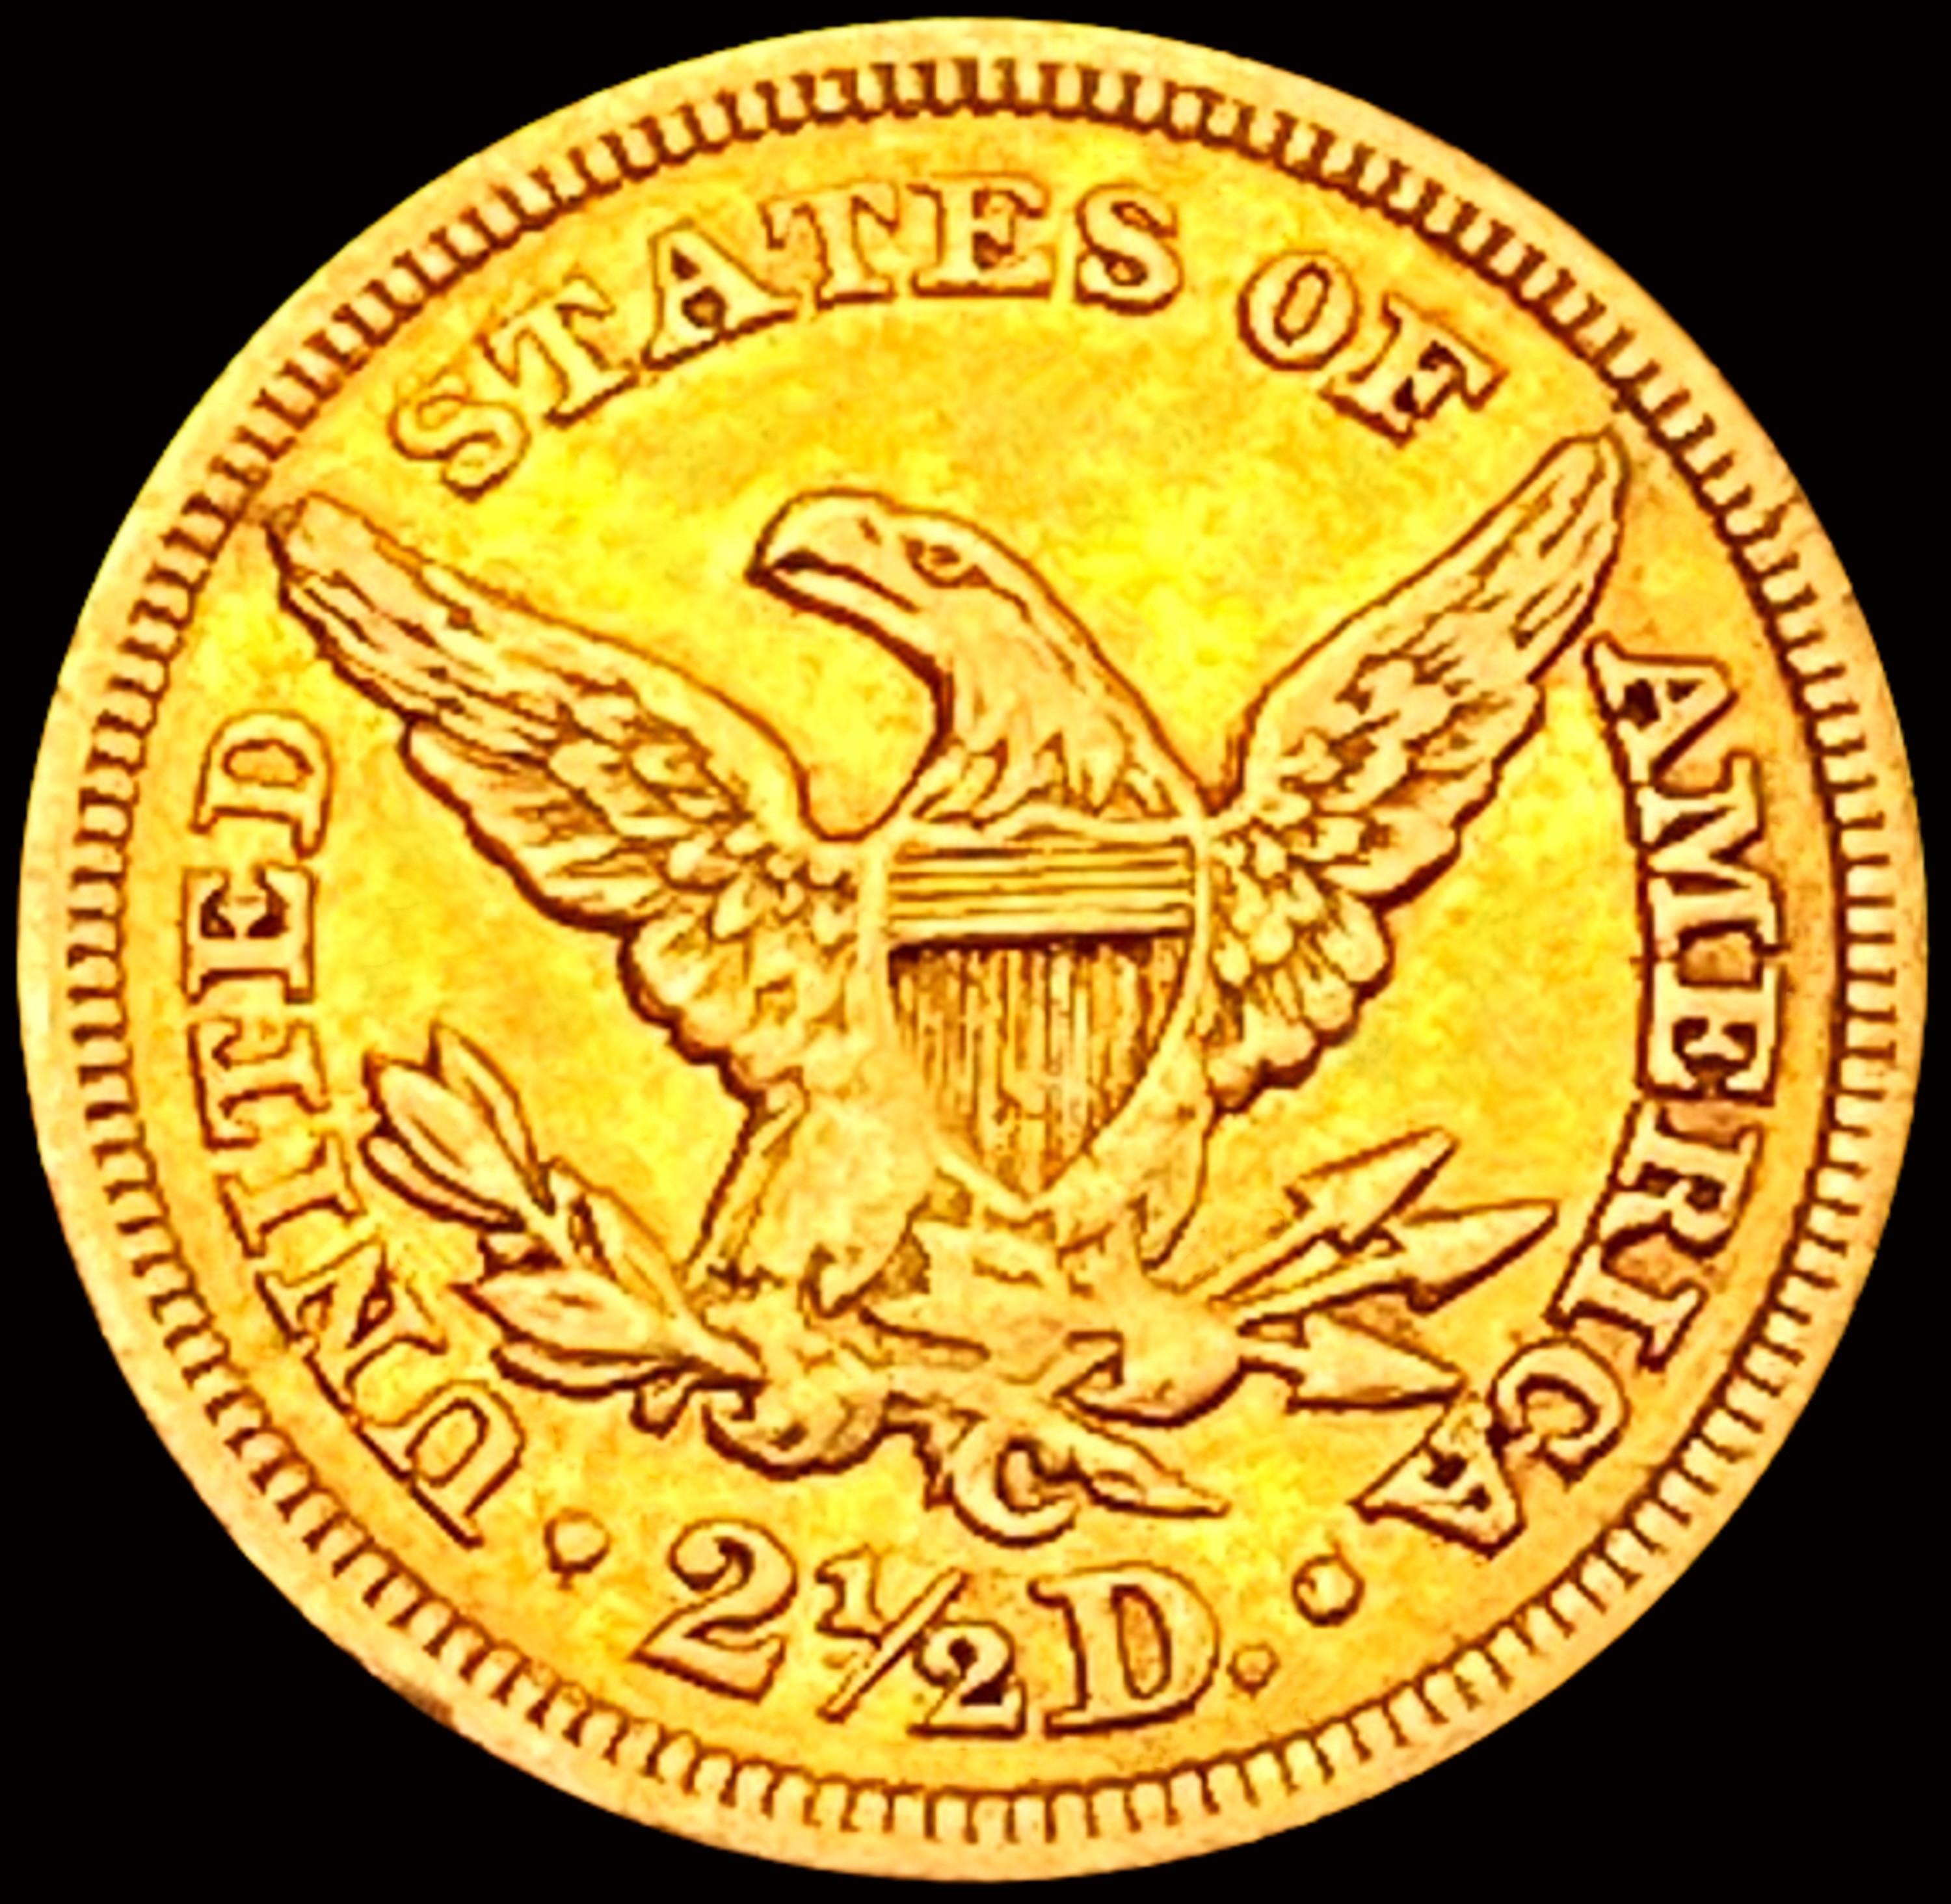 1848-C $2.50 Gold Quarter Eagle CHOICE AU